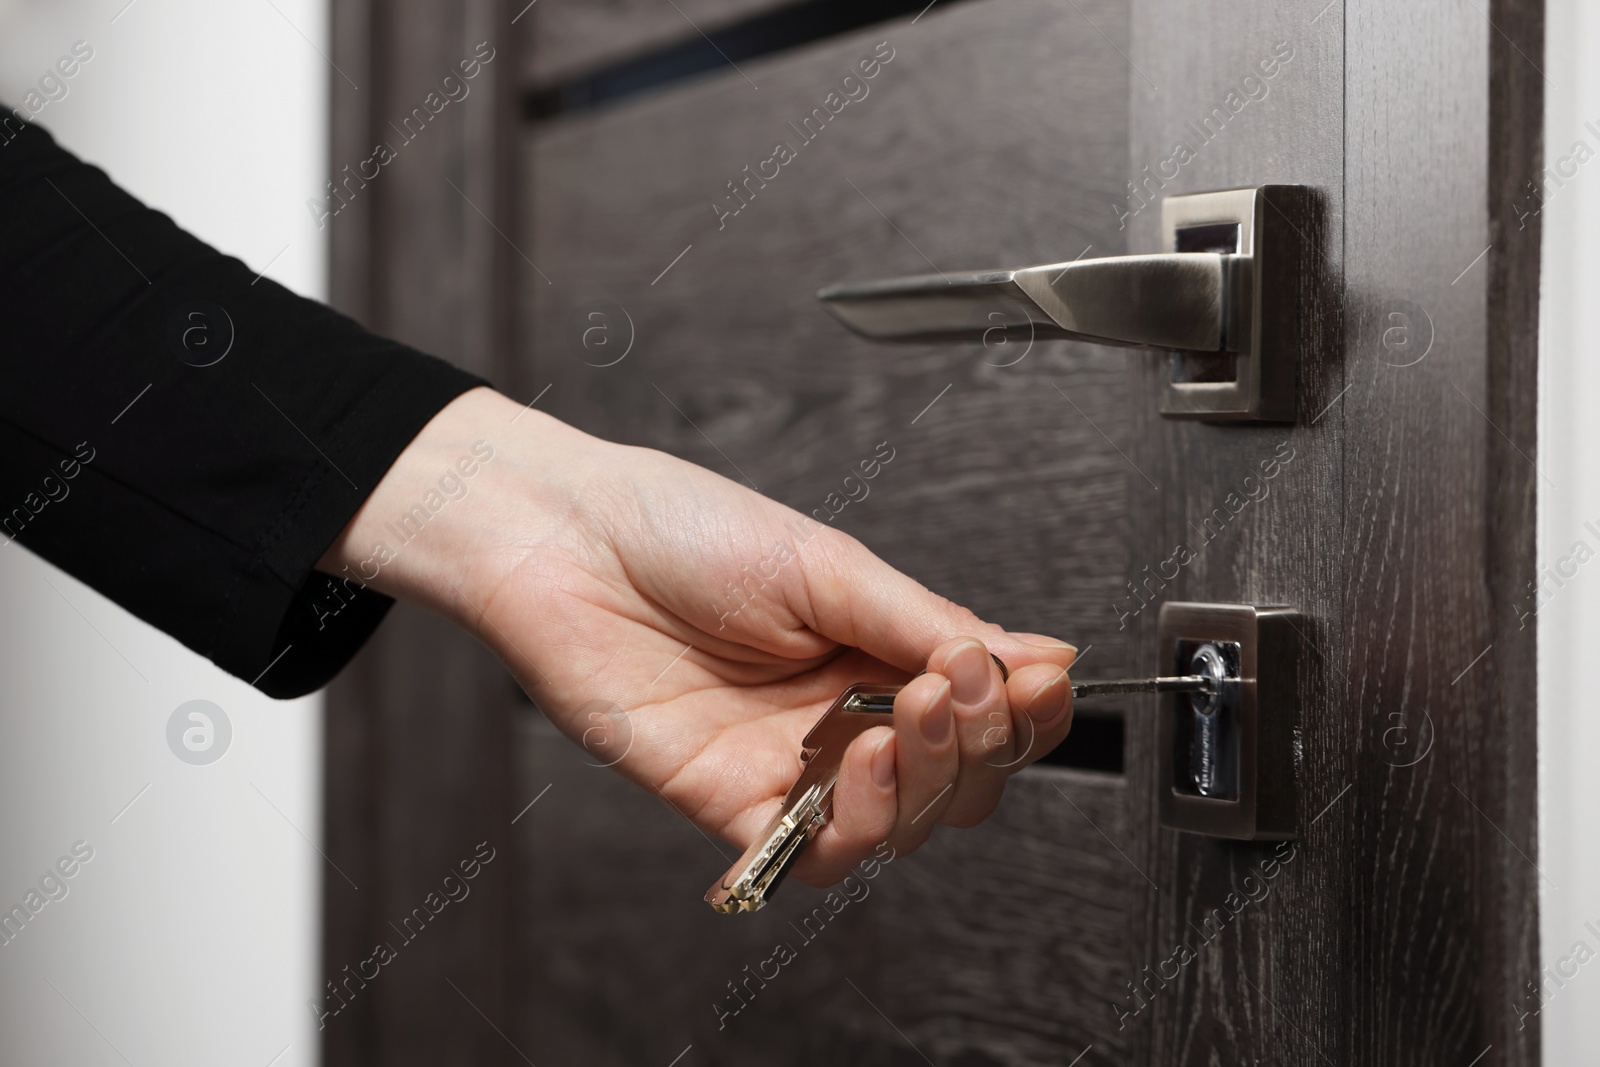 Photo of Woman unlocking door with key, closeup view